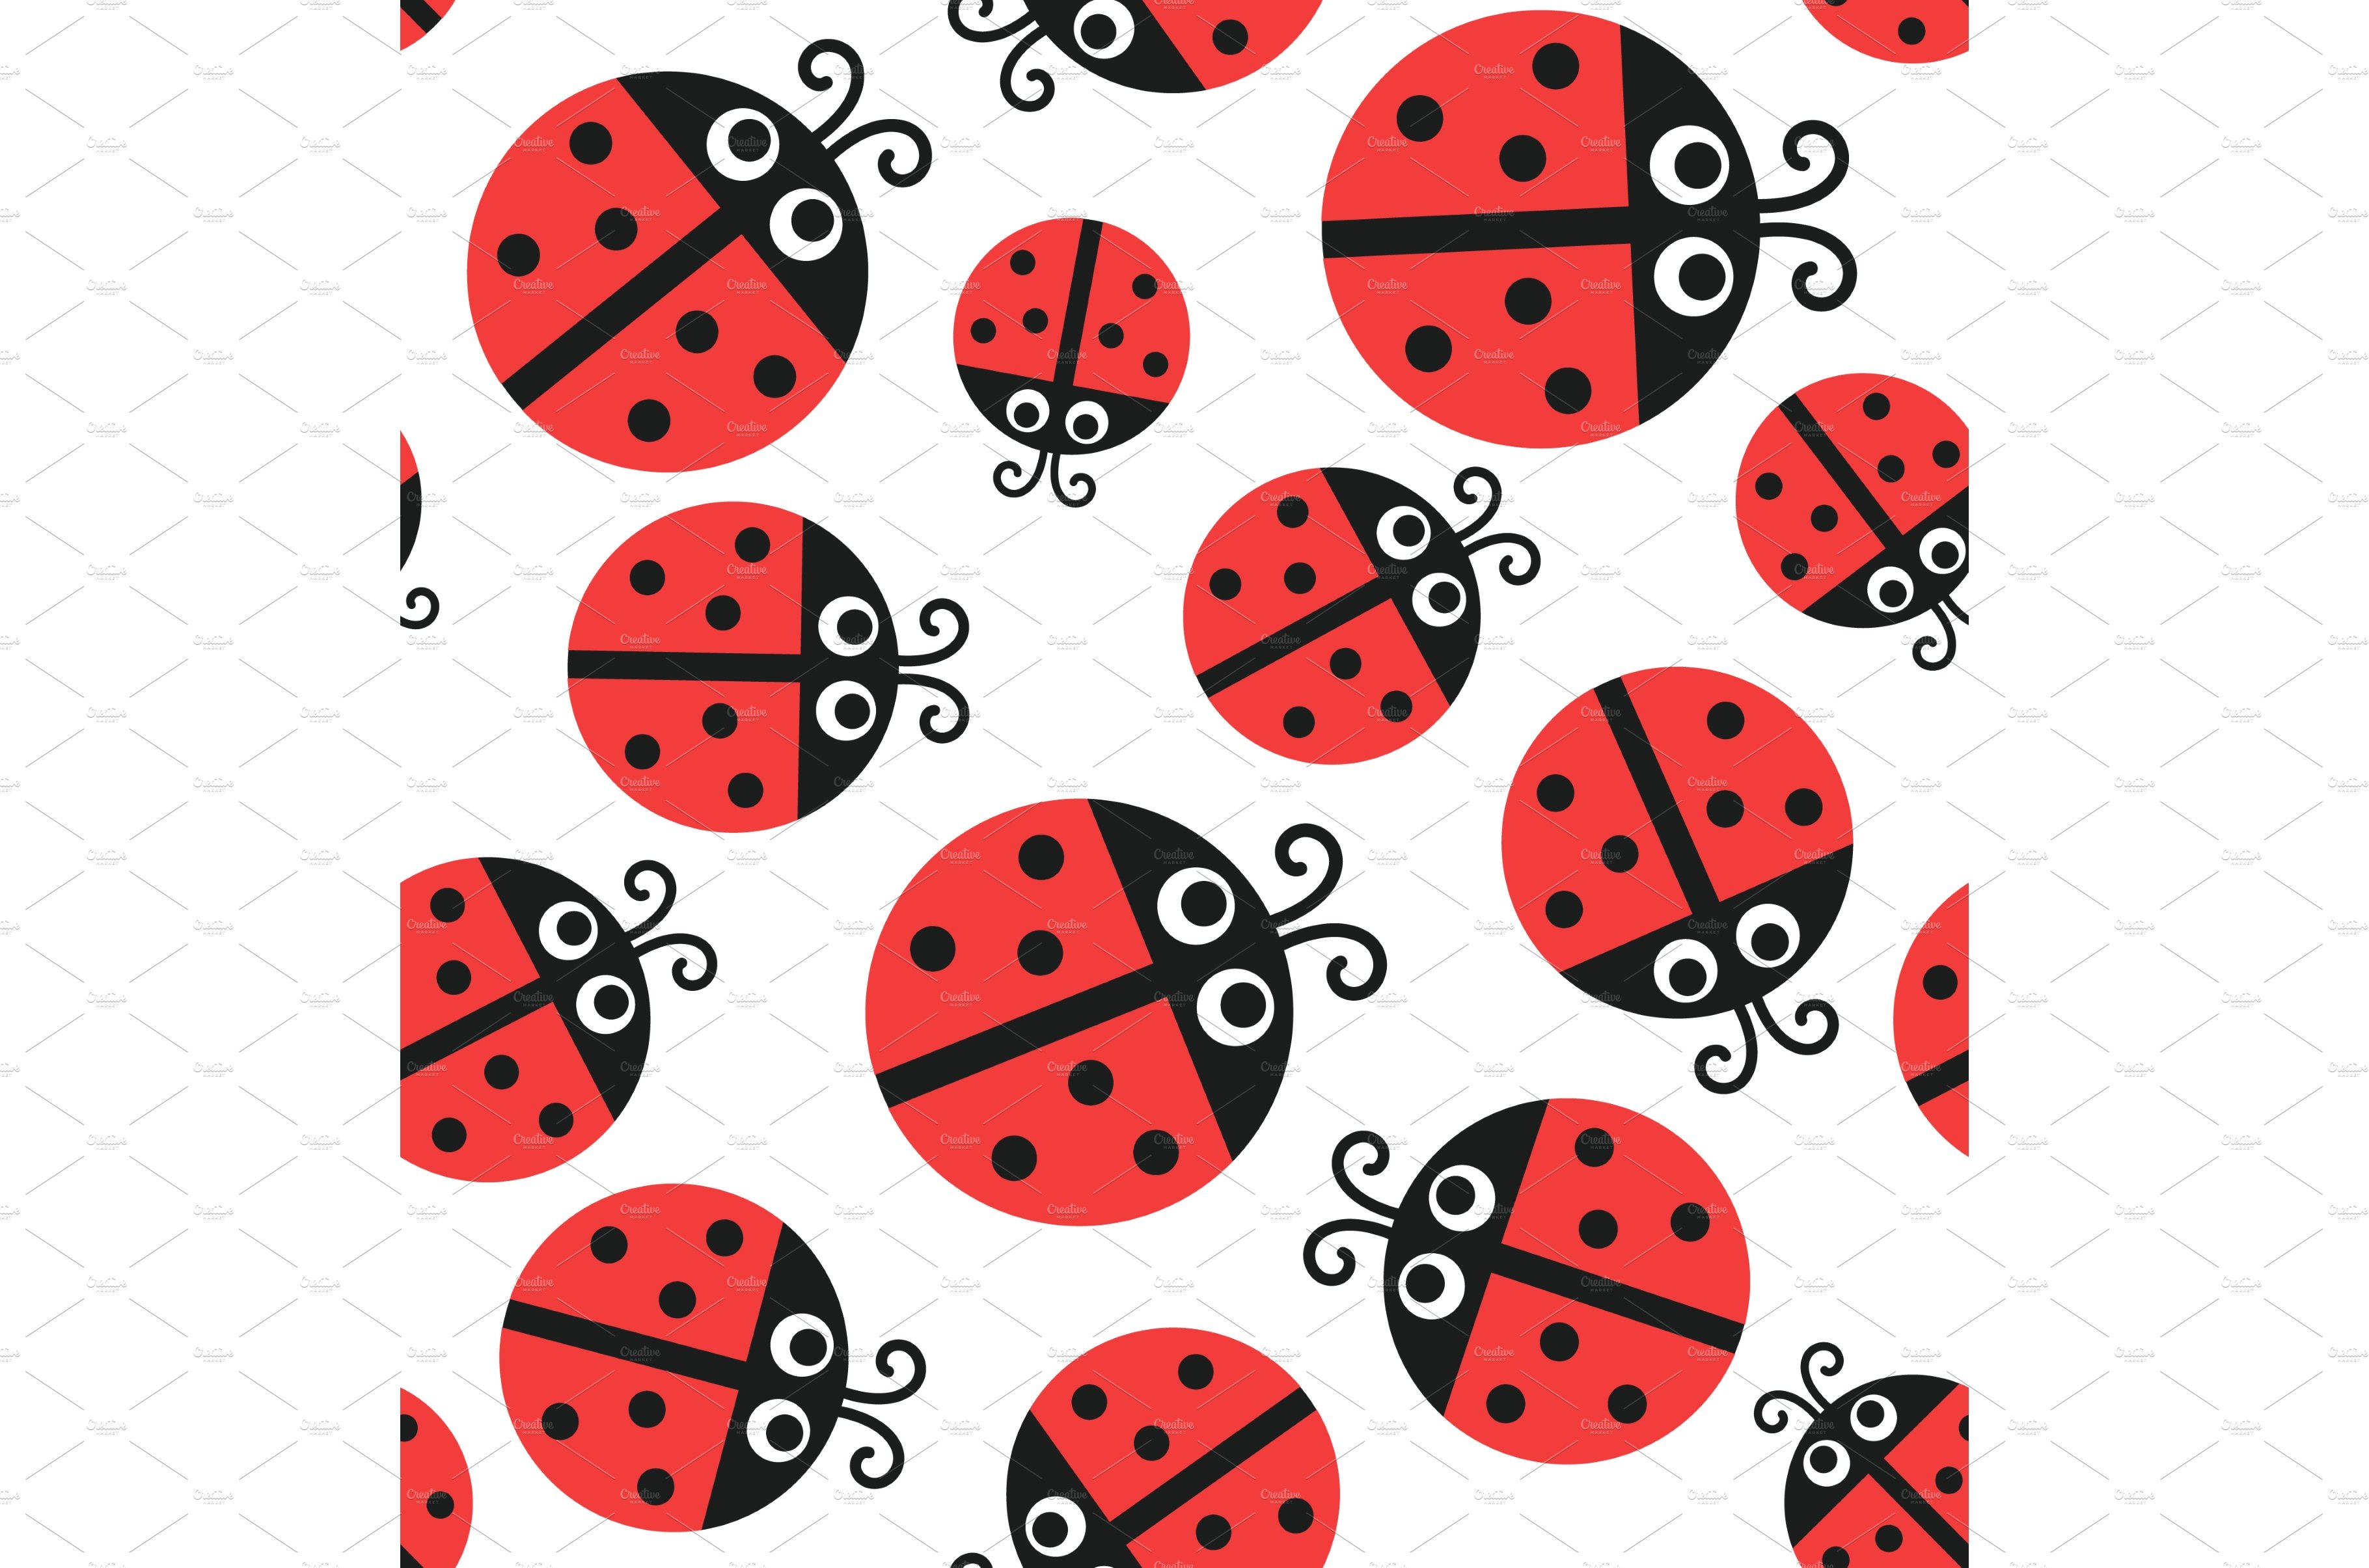 Ladybug pattern, seamless ornament cover image.